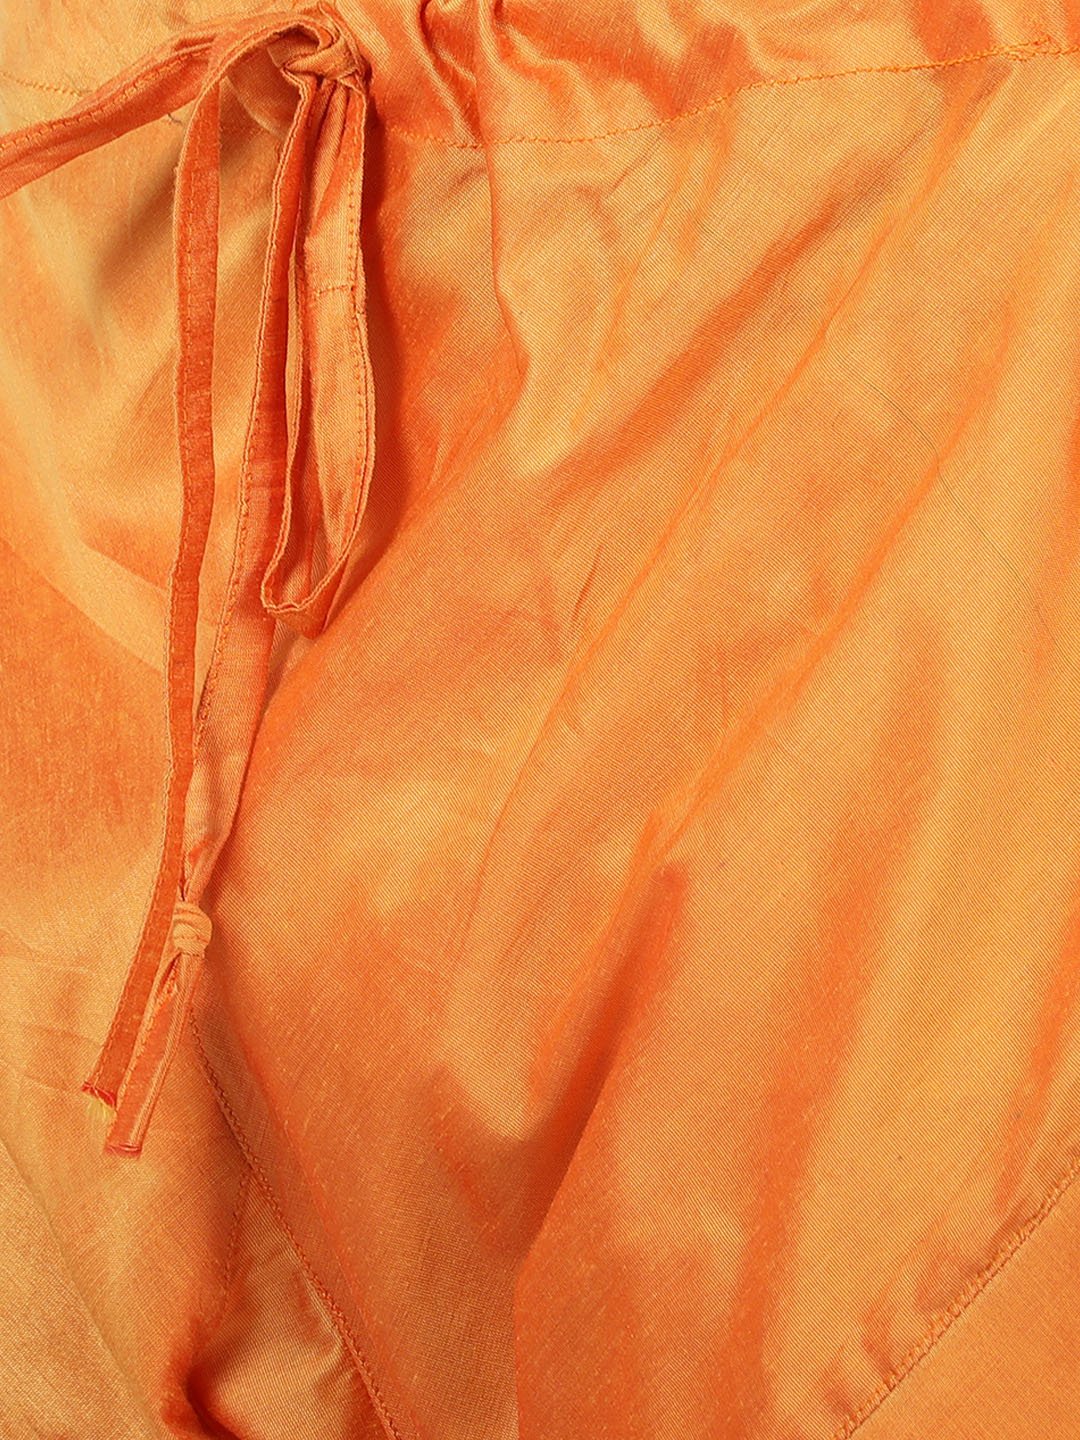 Men's Orange Cotton Blend Kurta and Pyjama Set